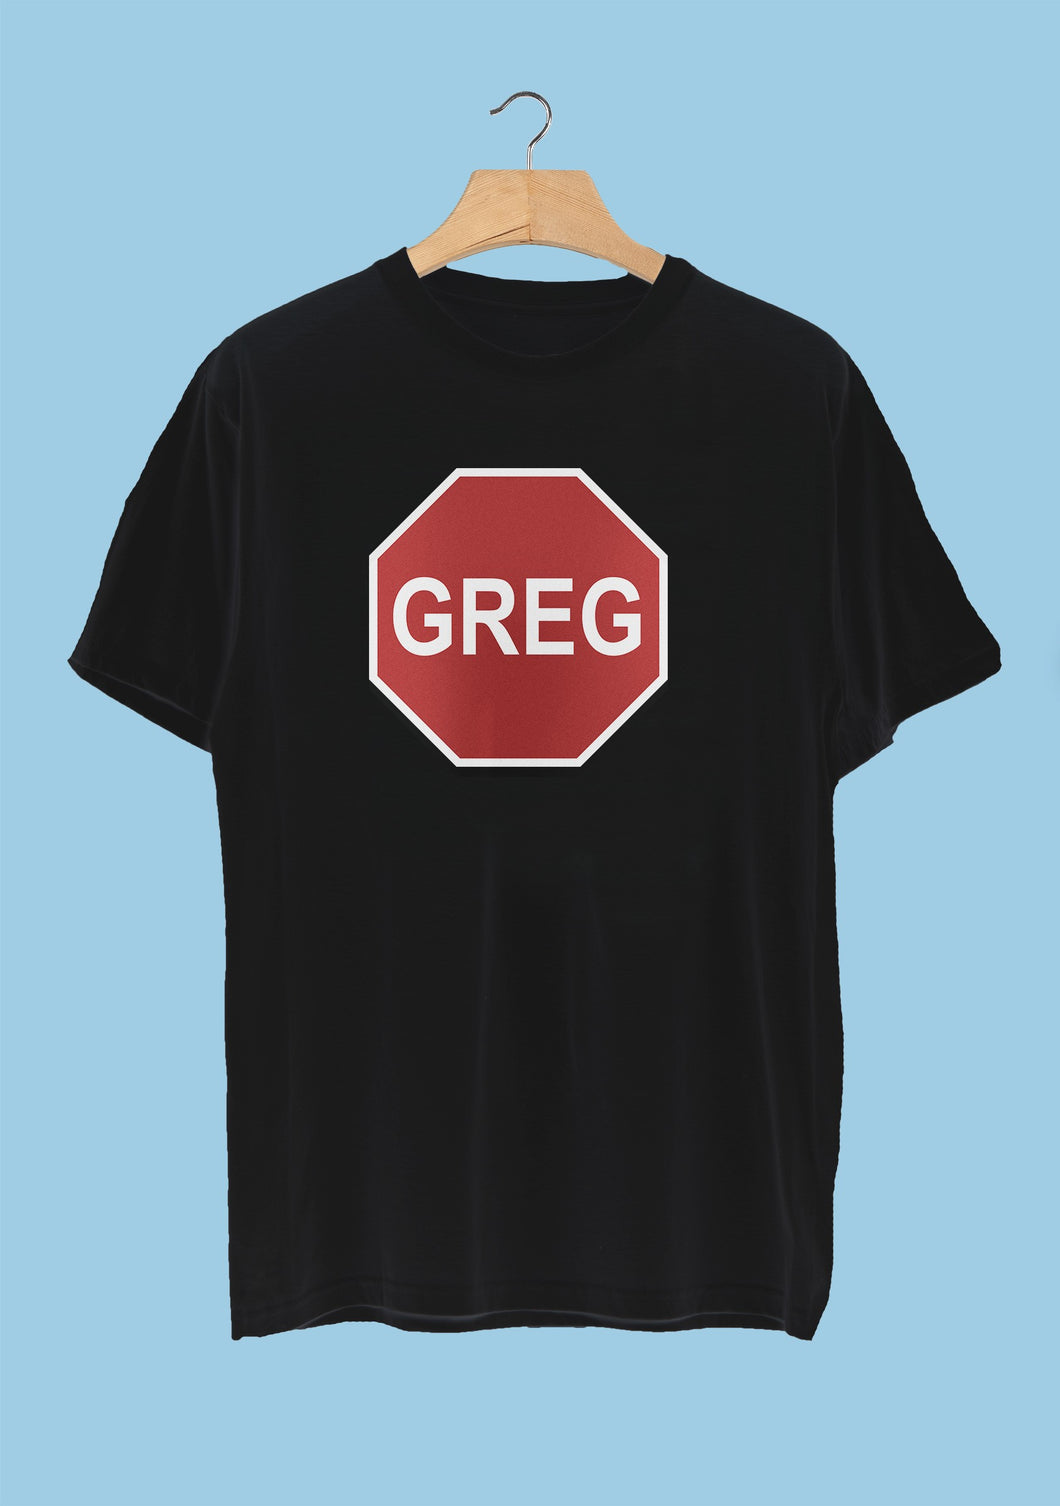 TISM - Greg! The Stop Sign!! - T-Shirt